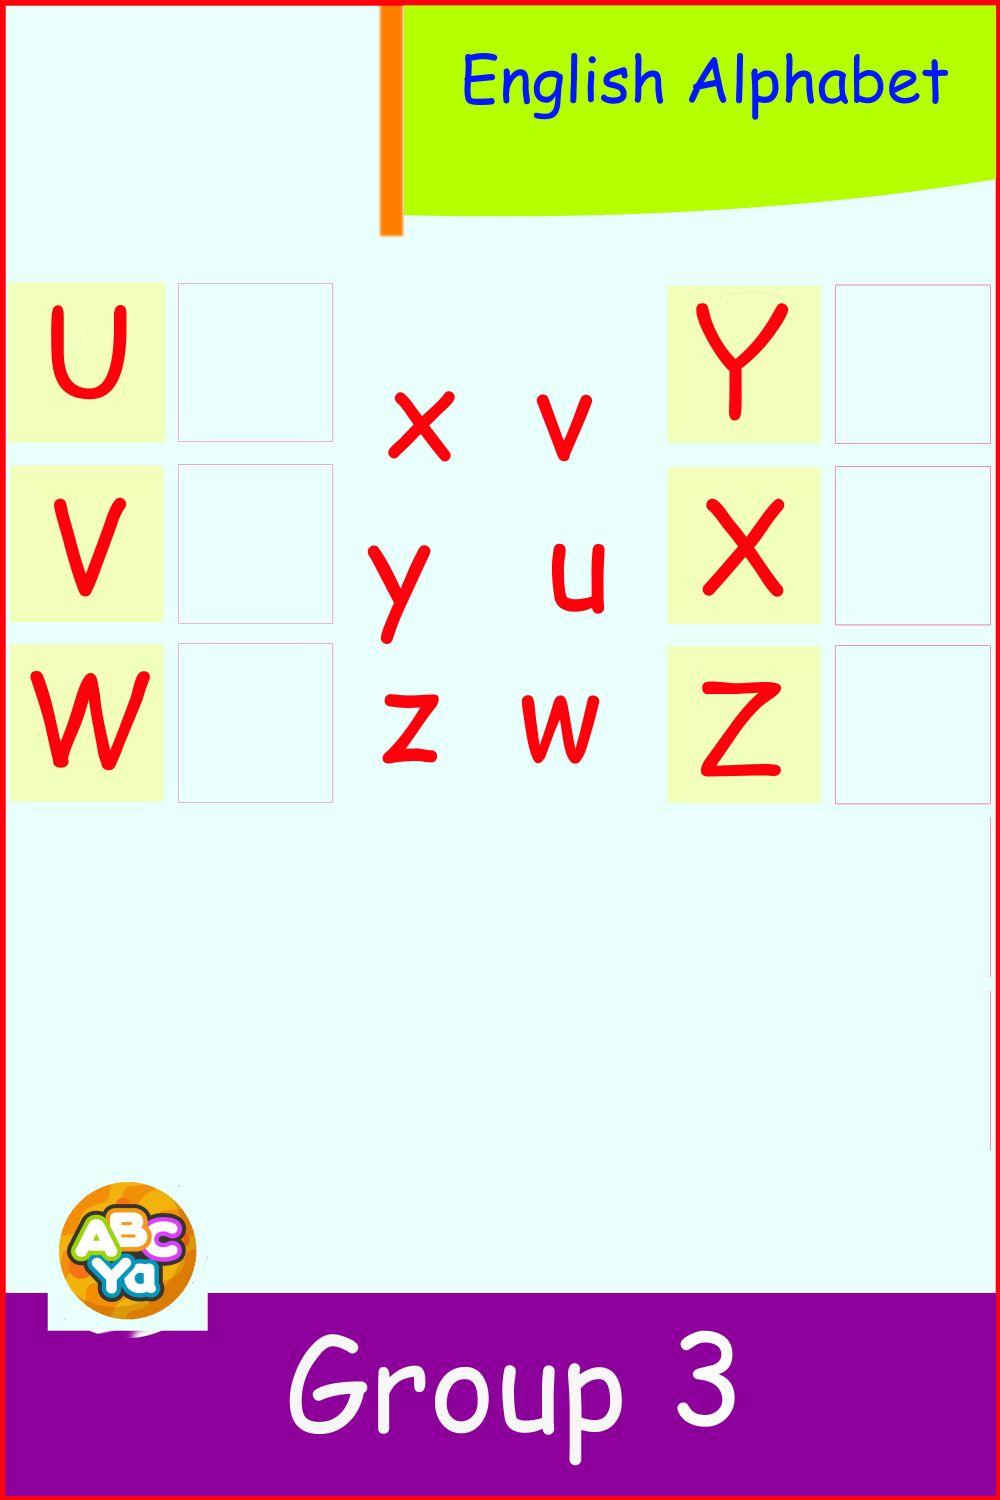 English Alphabet - Group 3 - U - Z